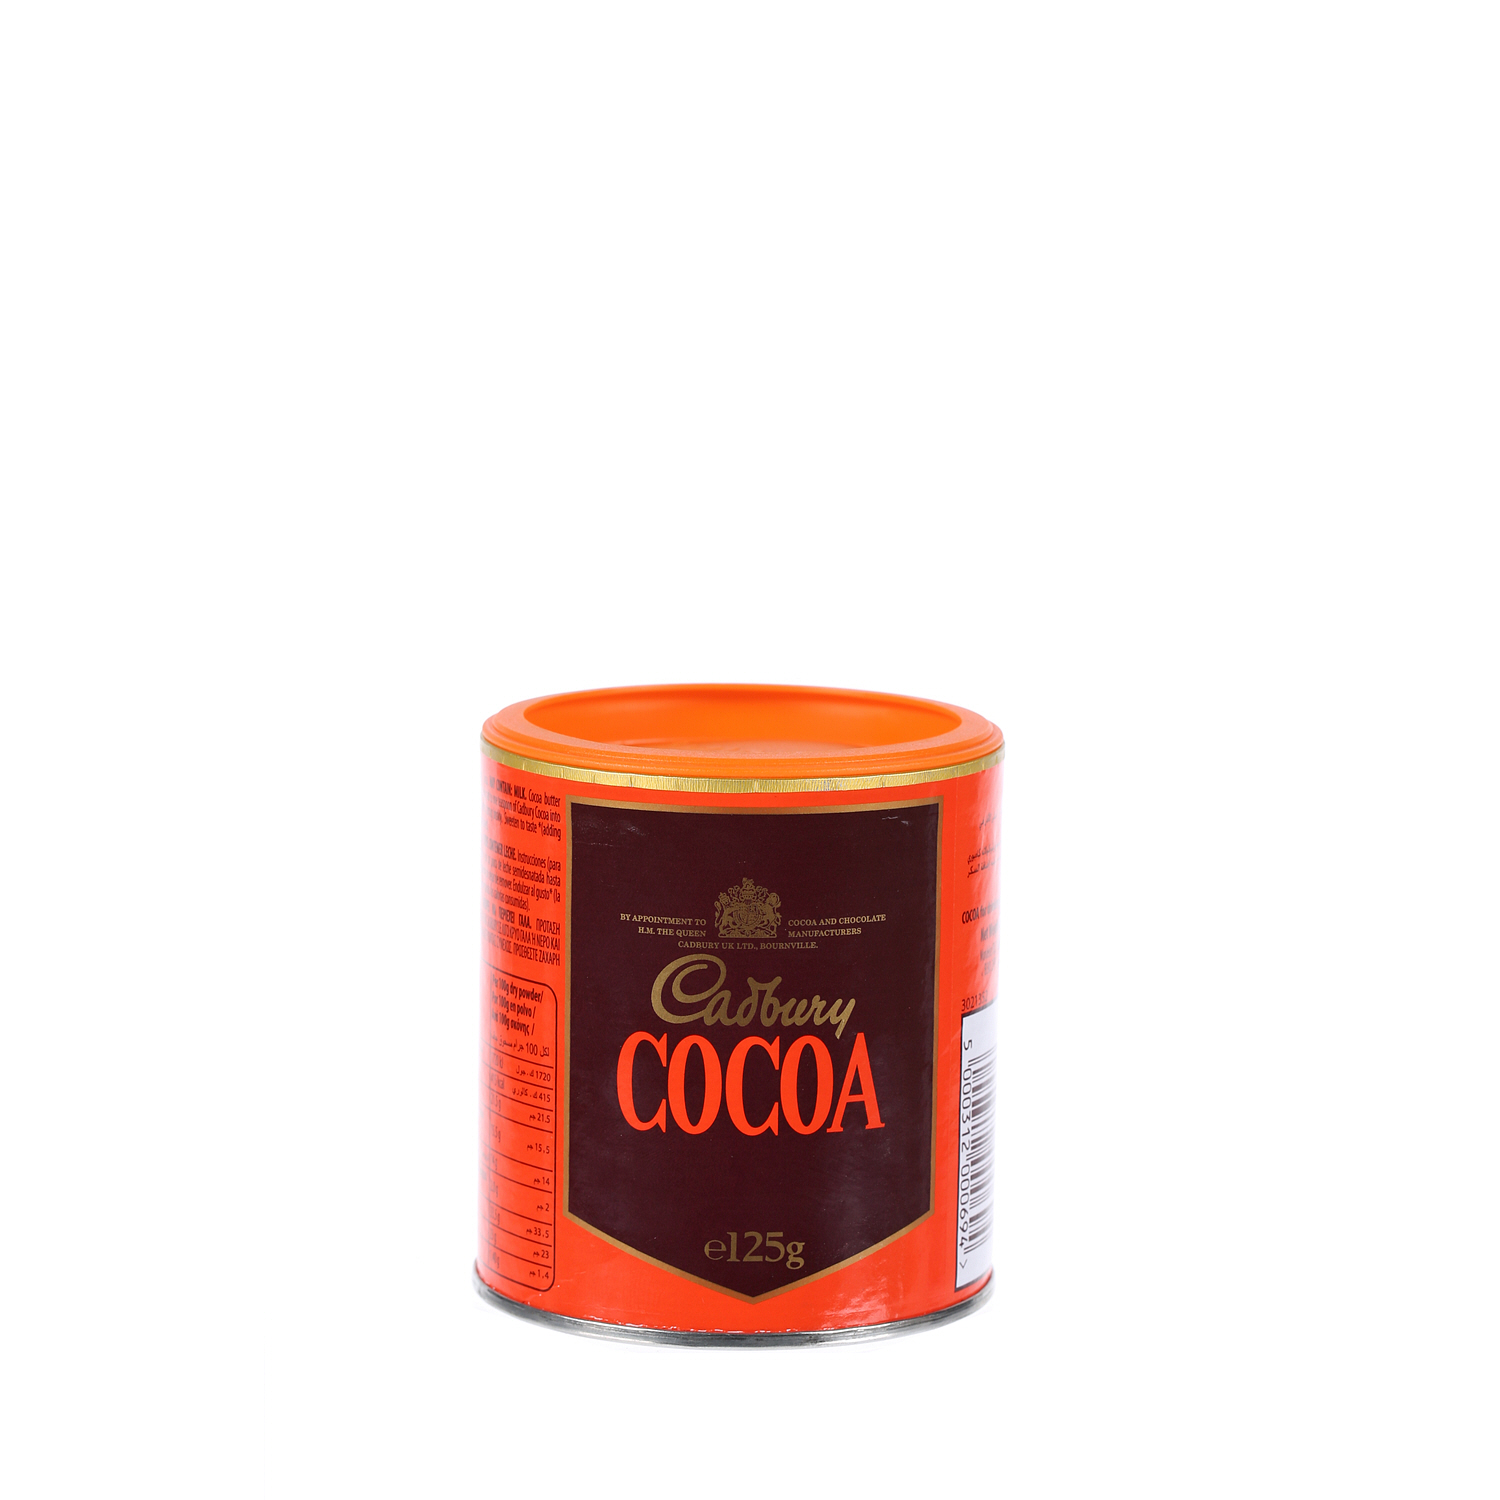 Cadbury Cocoa Powder 125gm